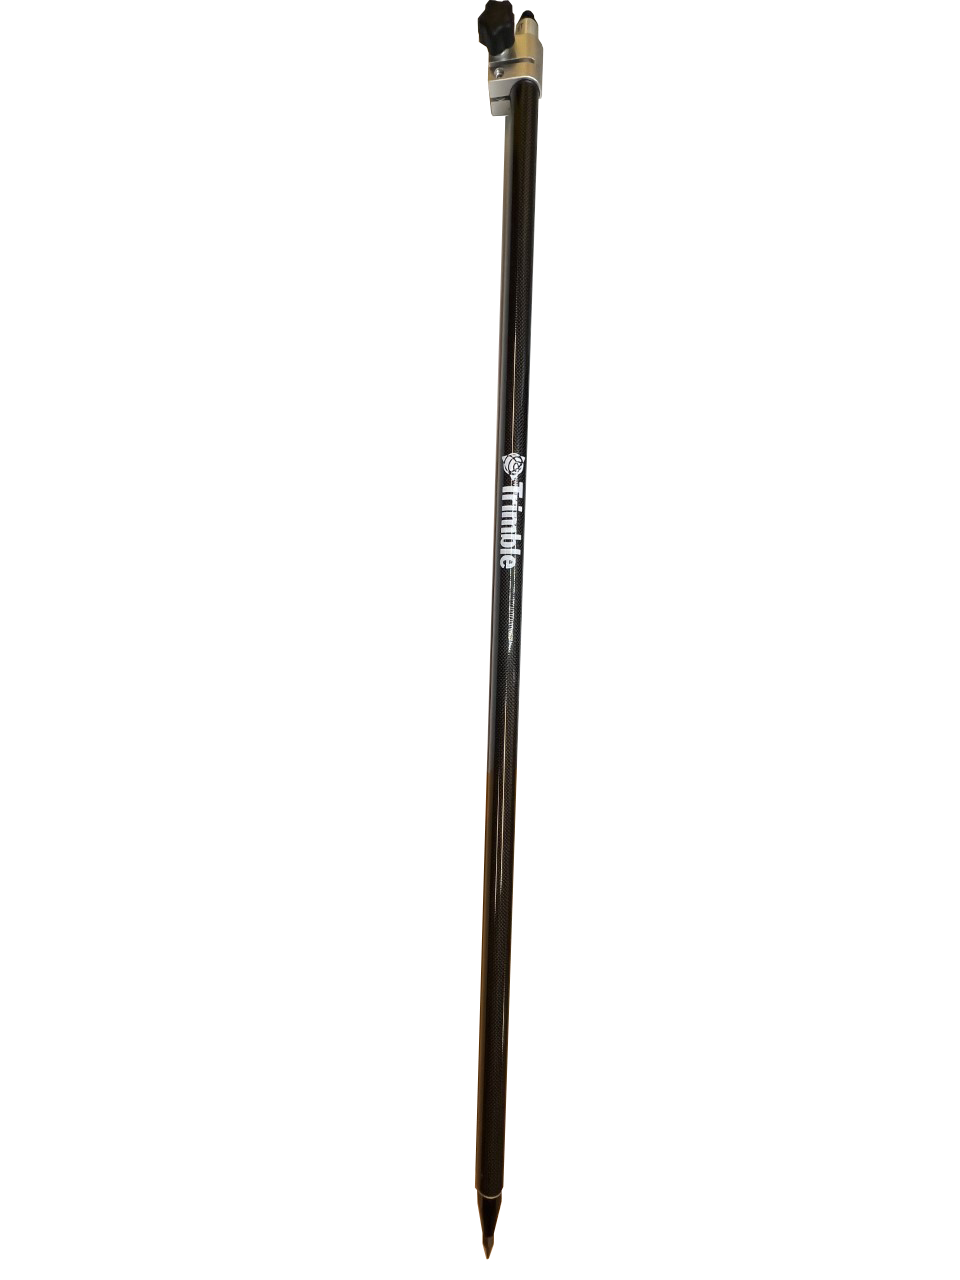 Rod - Trimble standard telescopic rod 2,6m